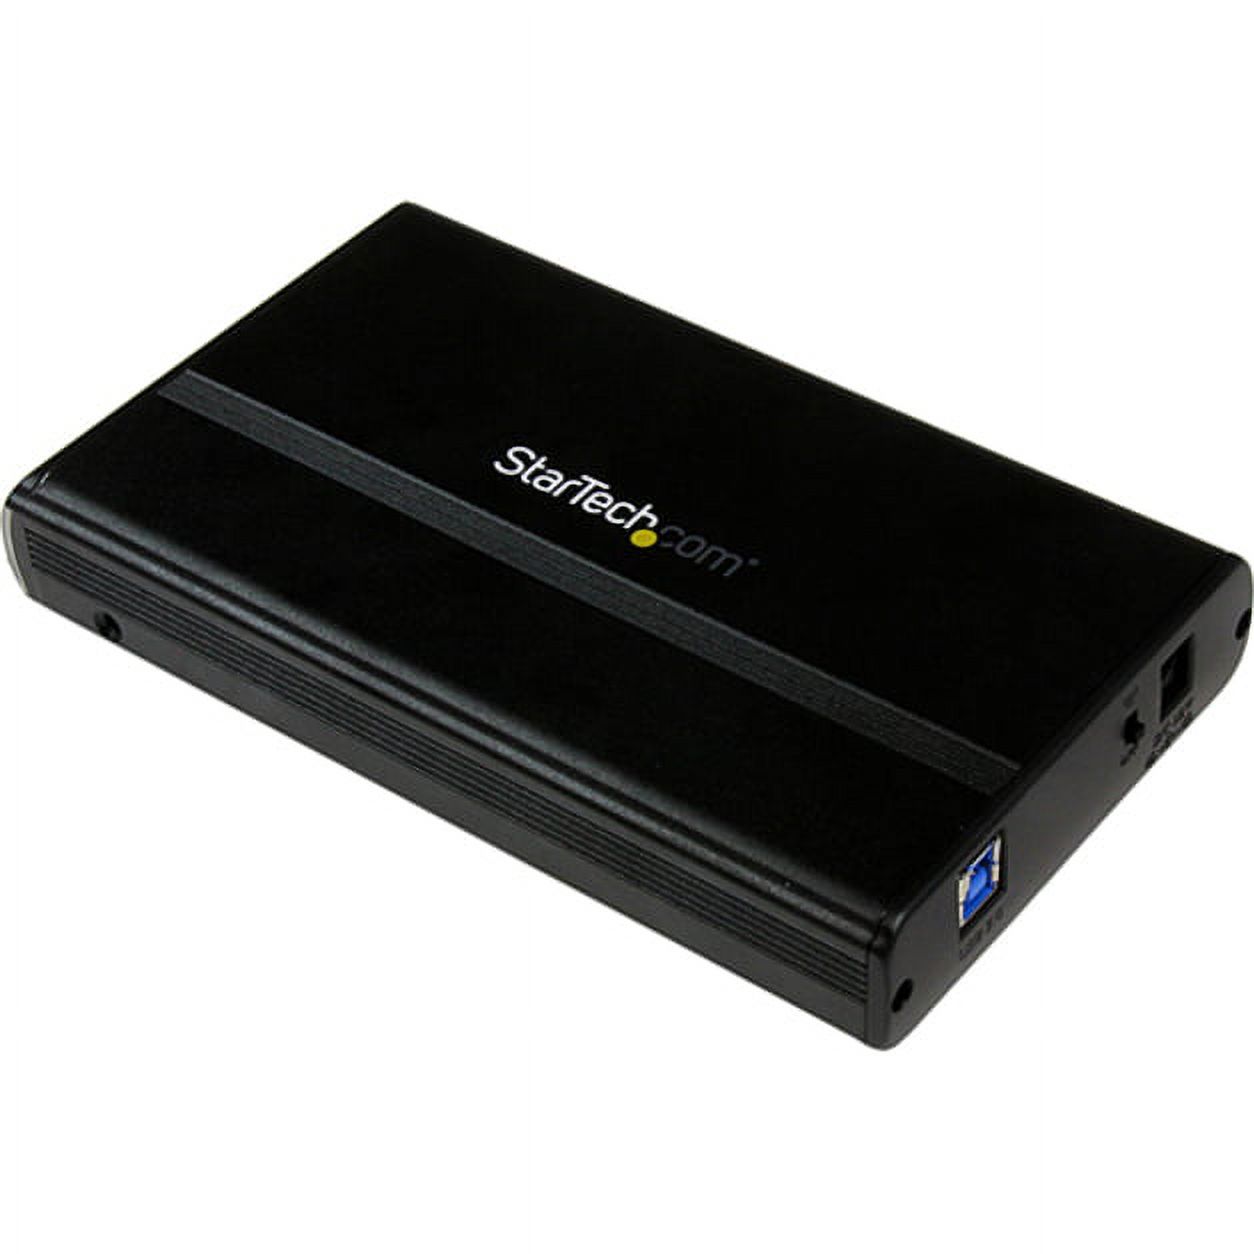 StarTech.com 3.5in USB 3.0 External IDE / SATA III Universal Hard Drive Enclosure, Portable External HDD - image 1 of 3